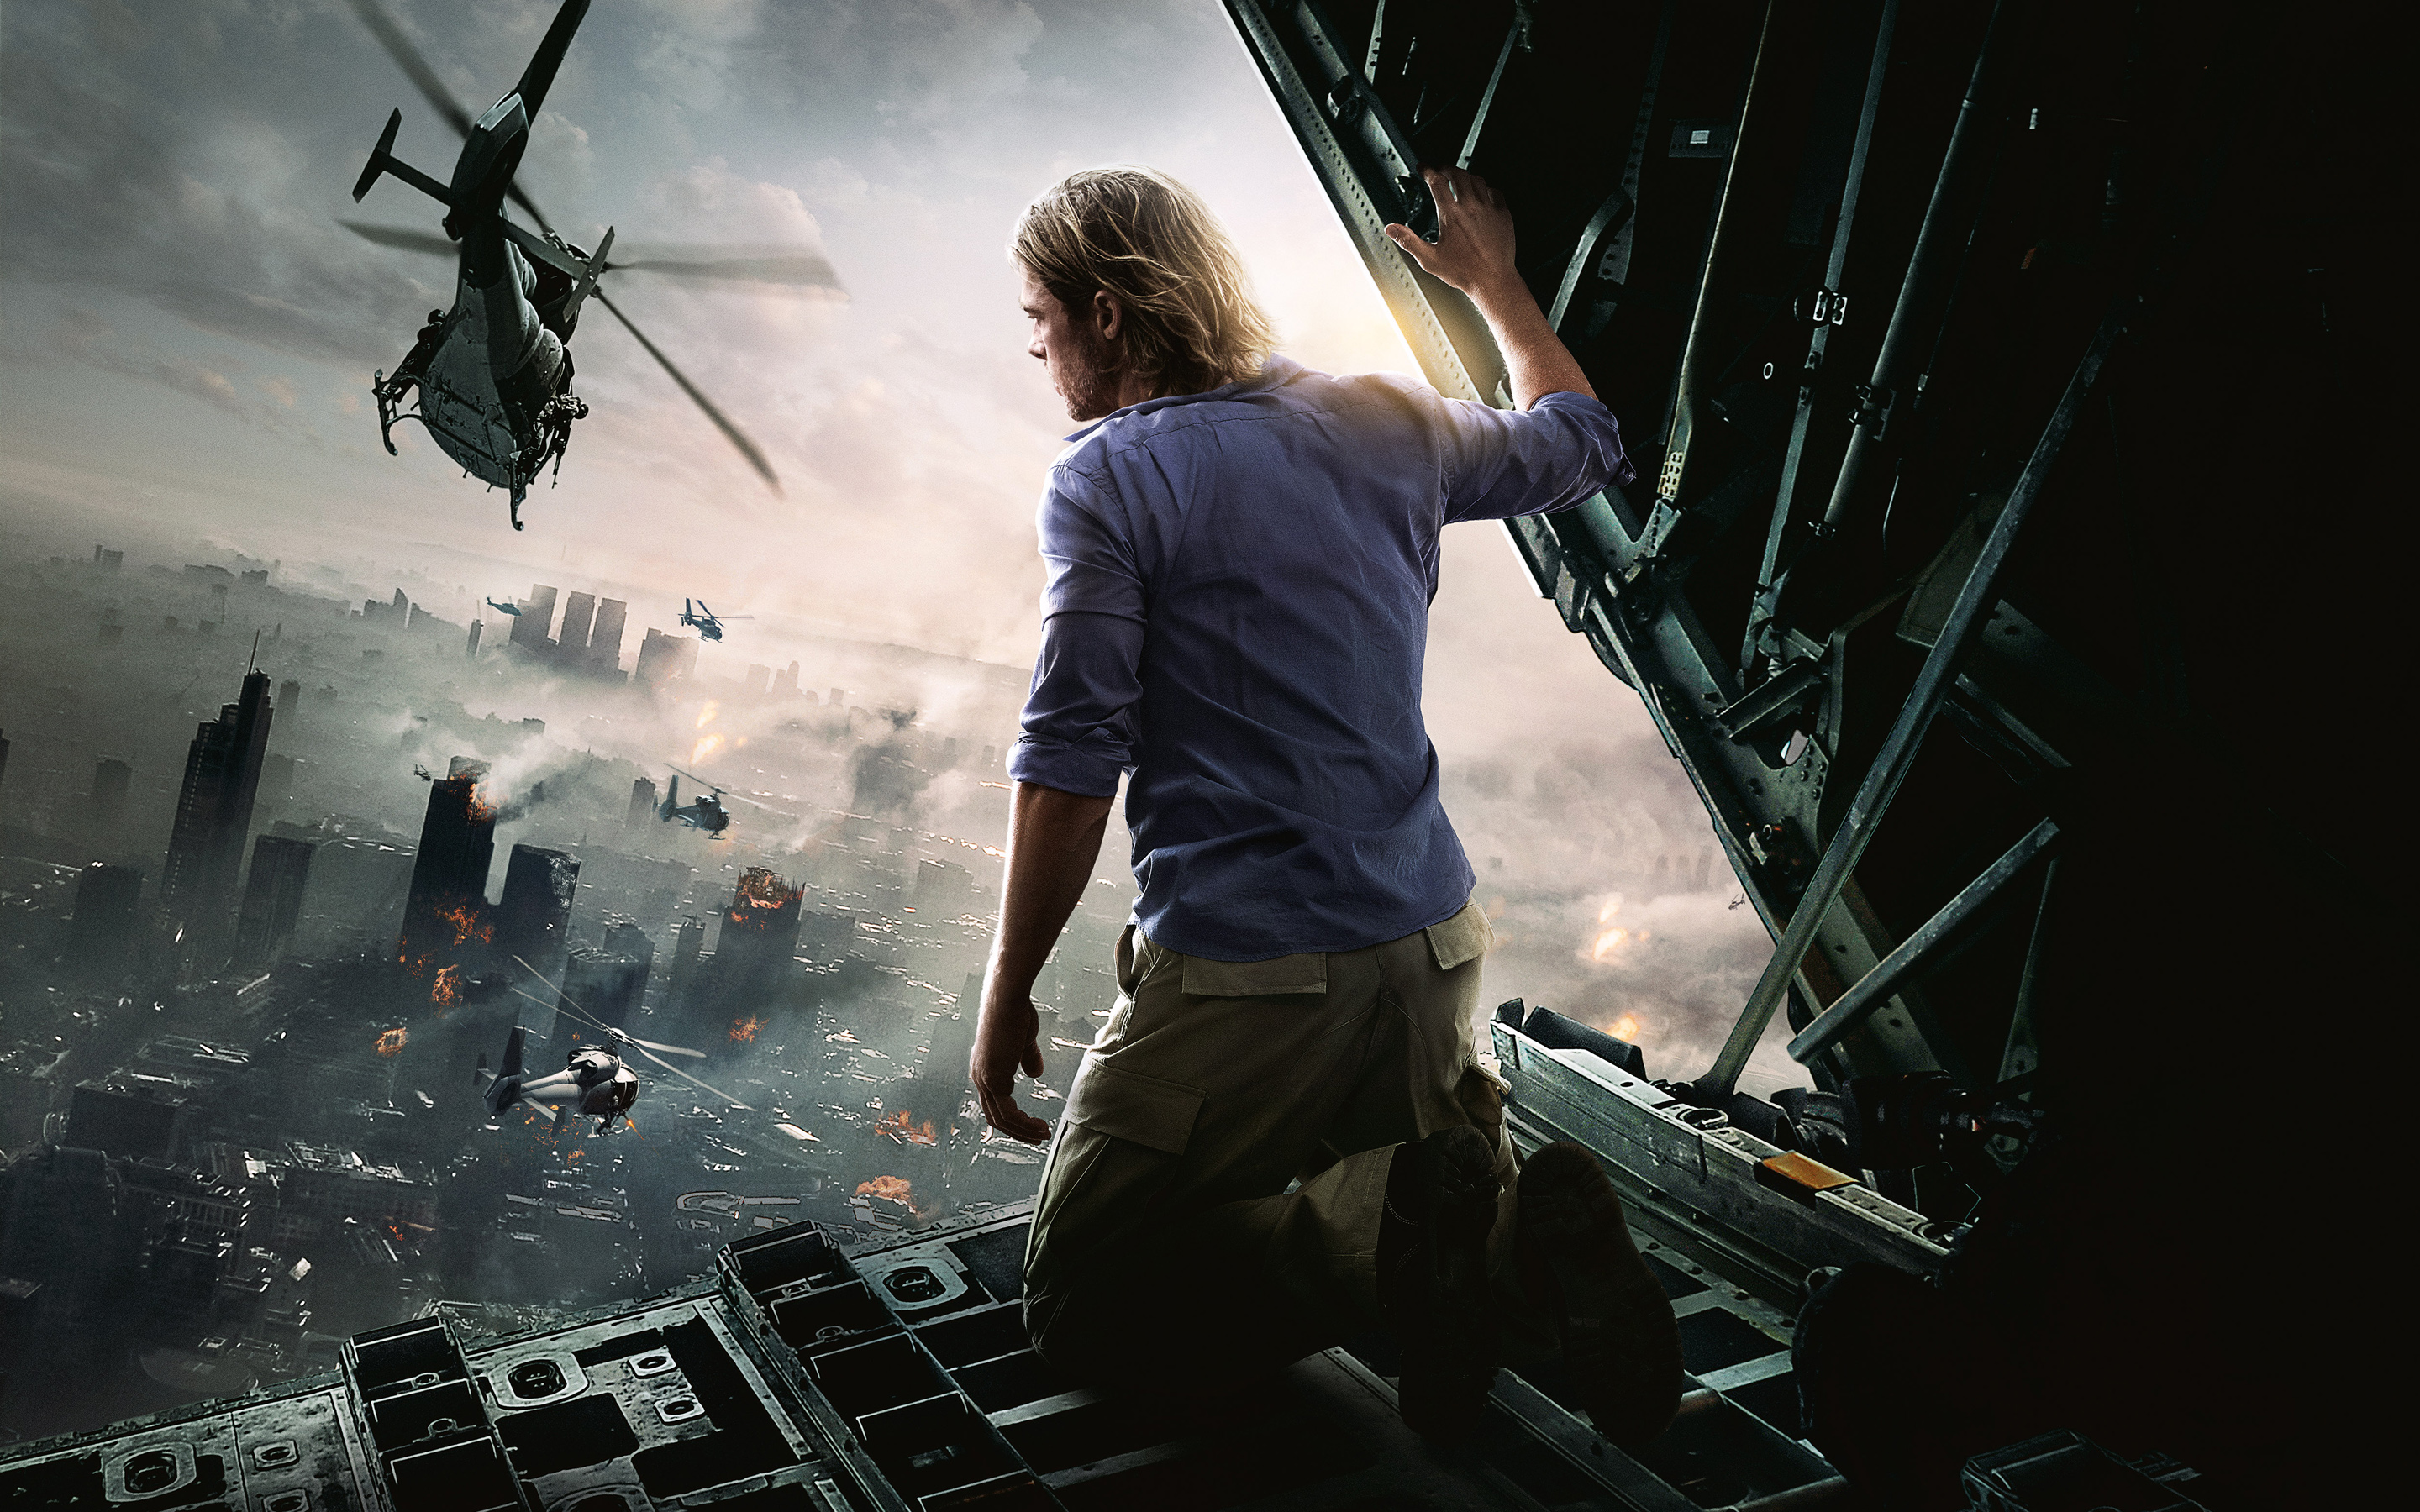 Brad Pitt World War Z Movie Wallpaper HD